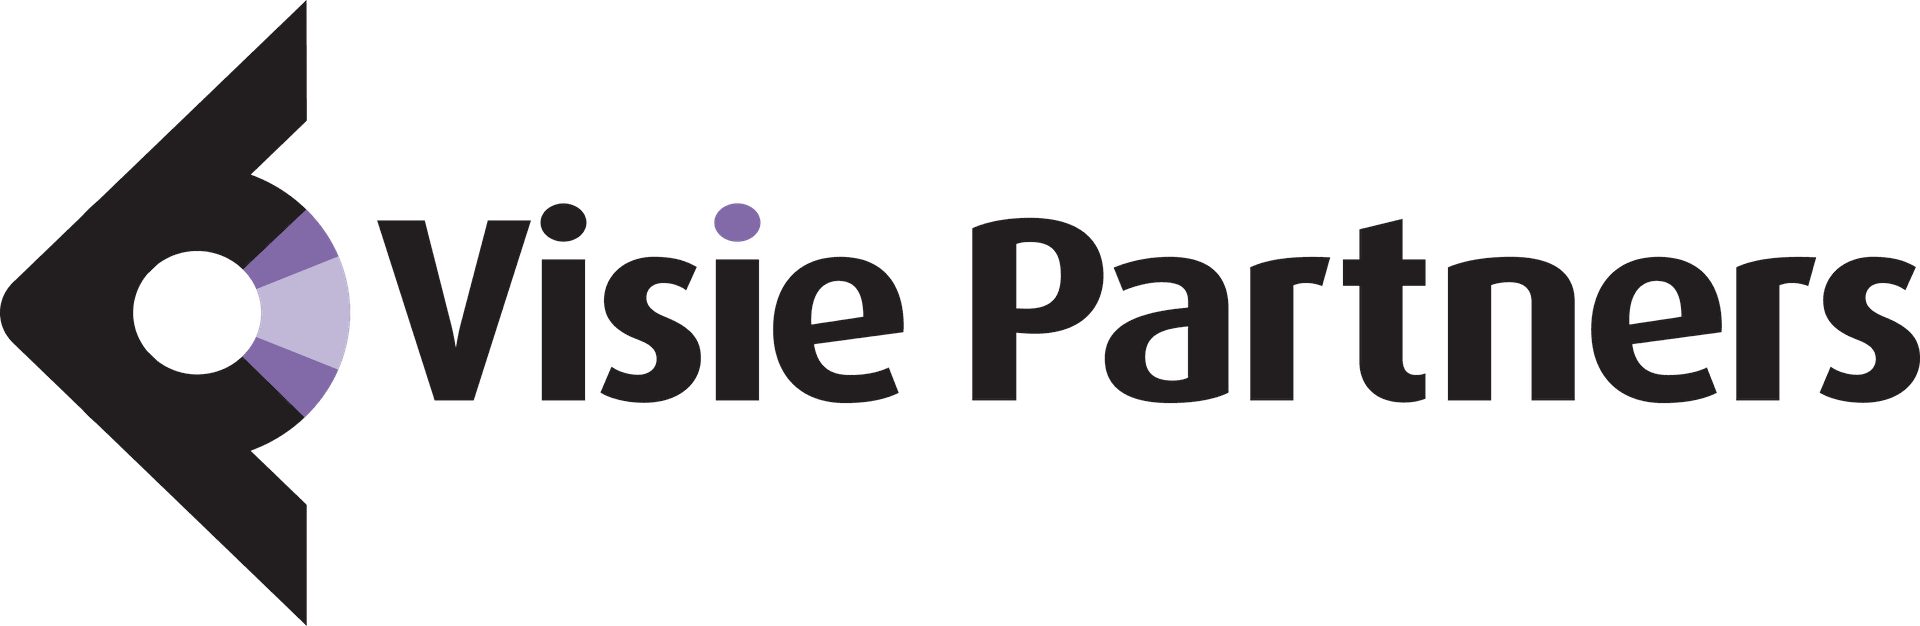 Visie Partners Portal